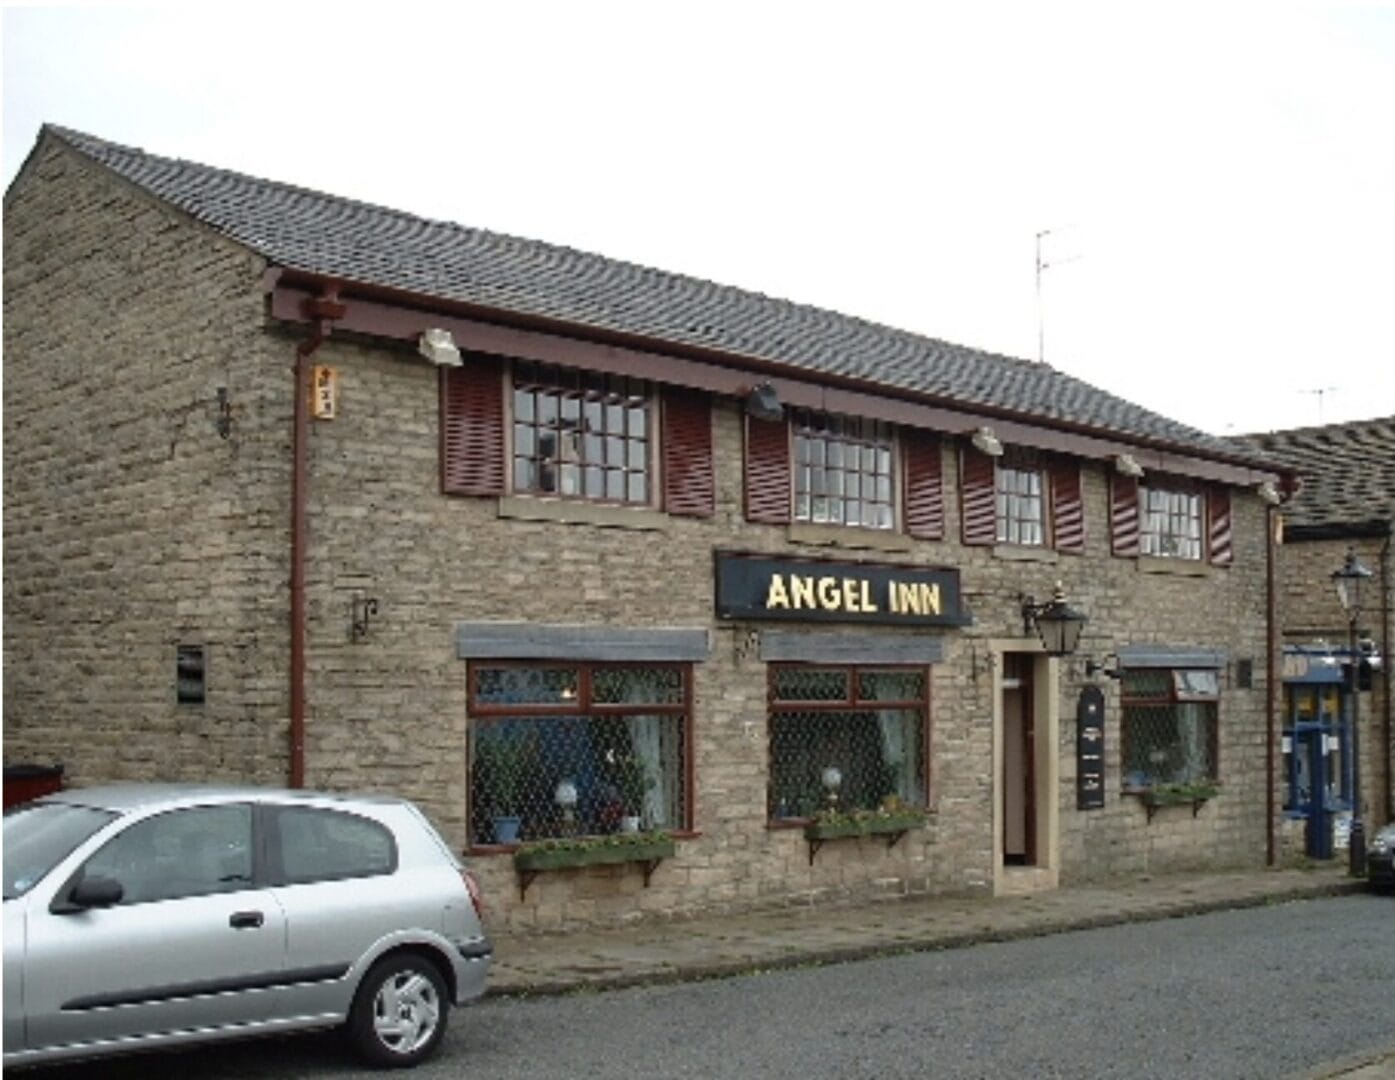 The Angel Inn Oldham